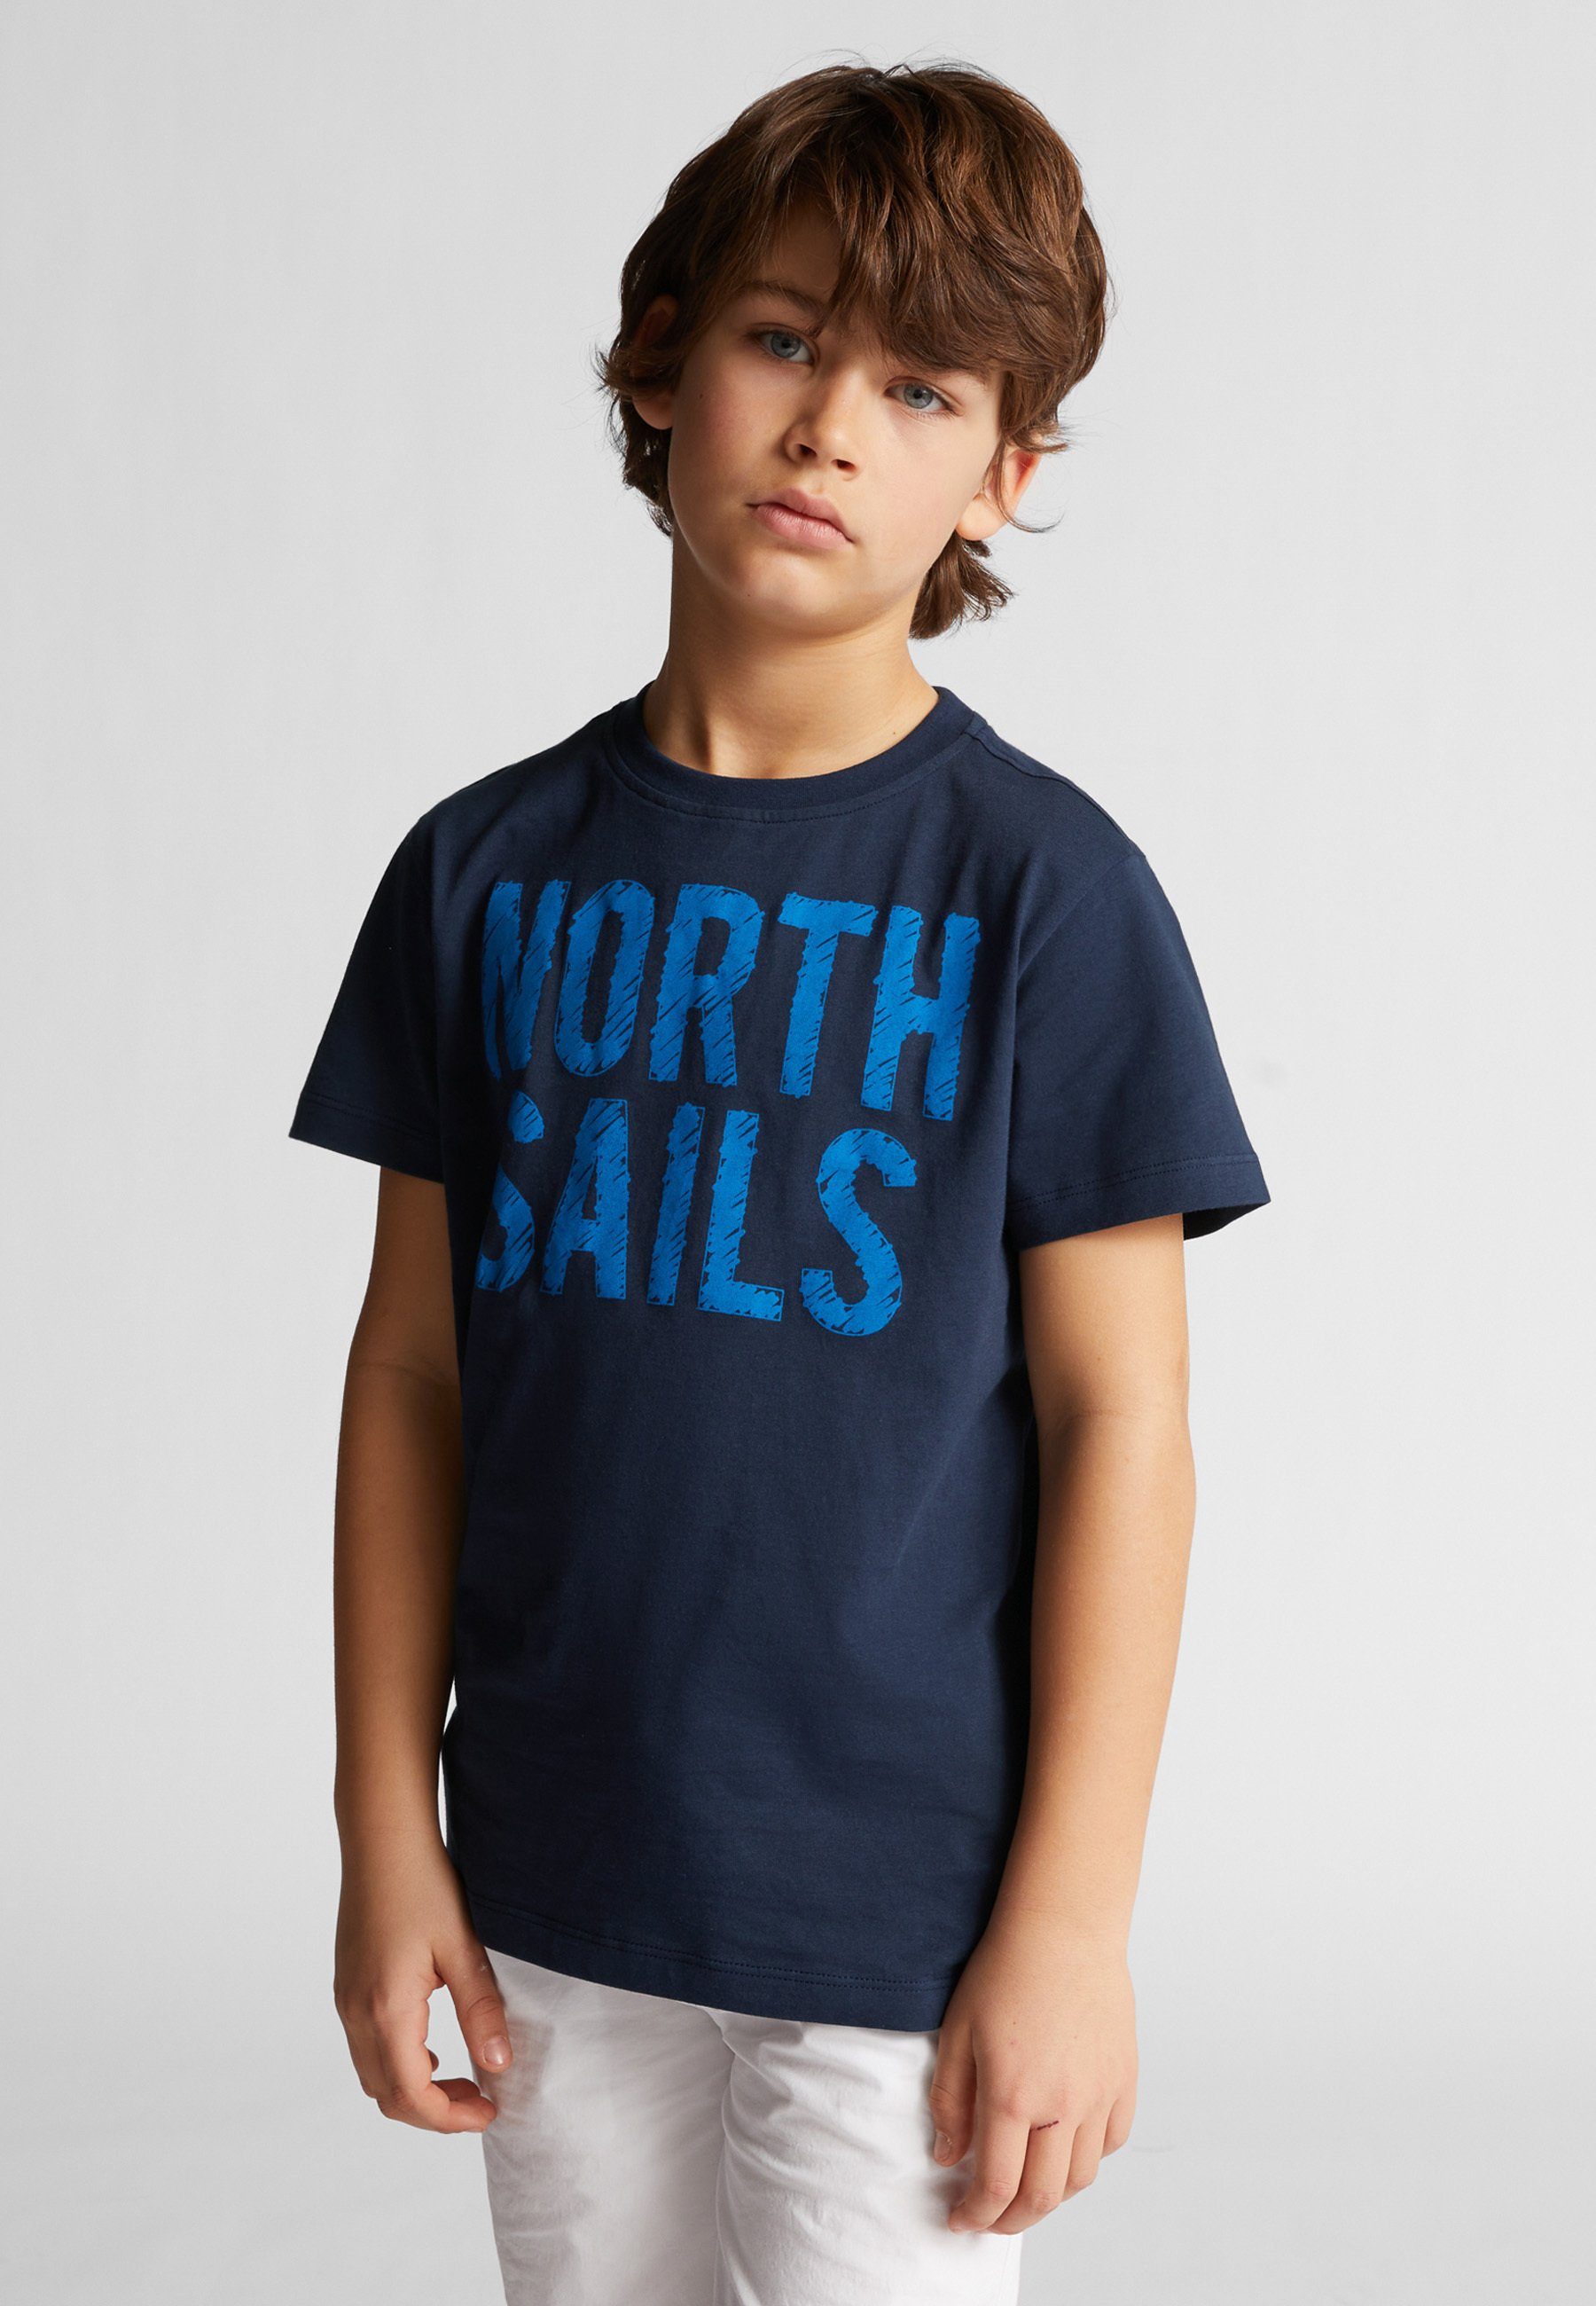 Sails North T-Shirt MARINEBLAU Baumwoll-Jersey-T-Shirt